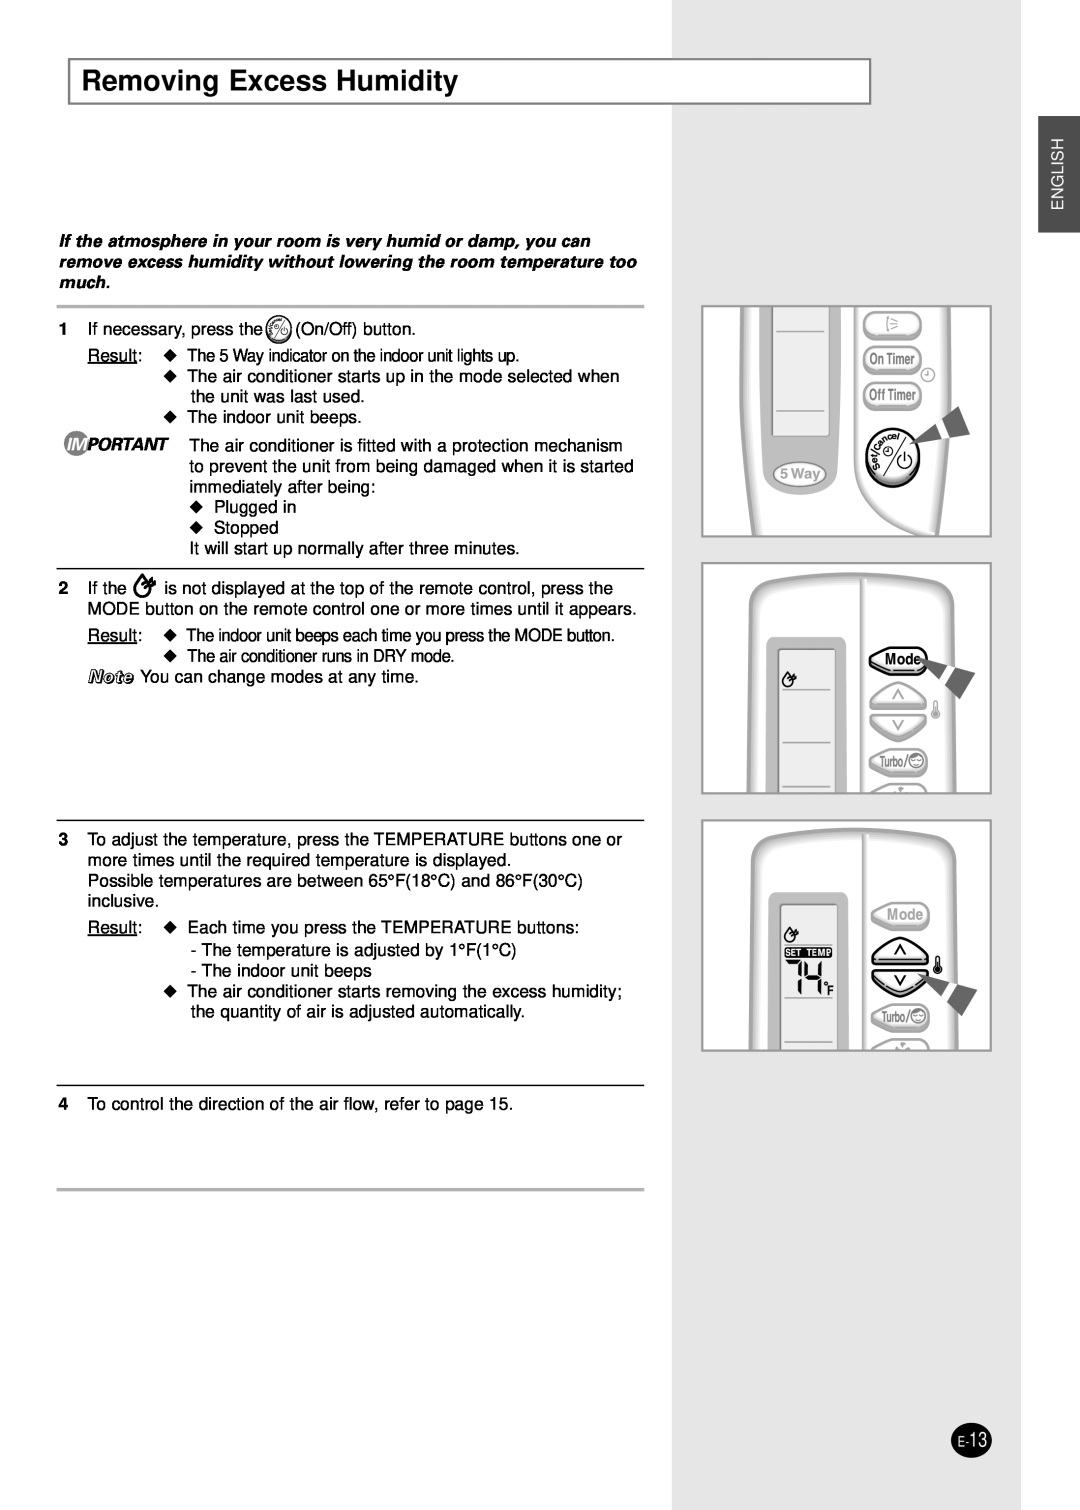 Samsung AM18B1C09 installation manual Removing Excess Humidity, English 